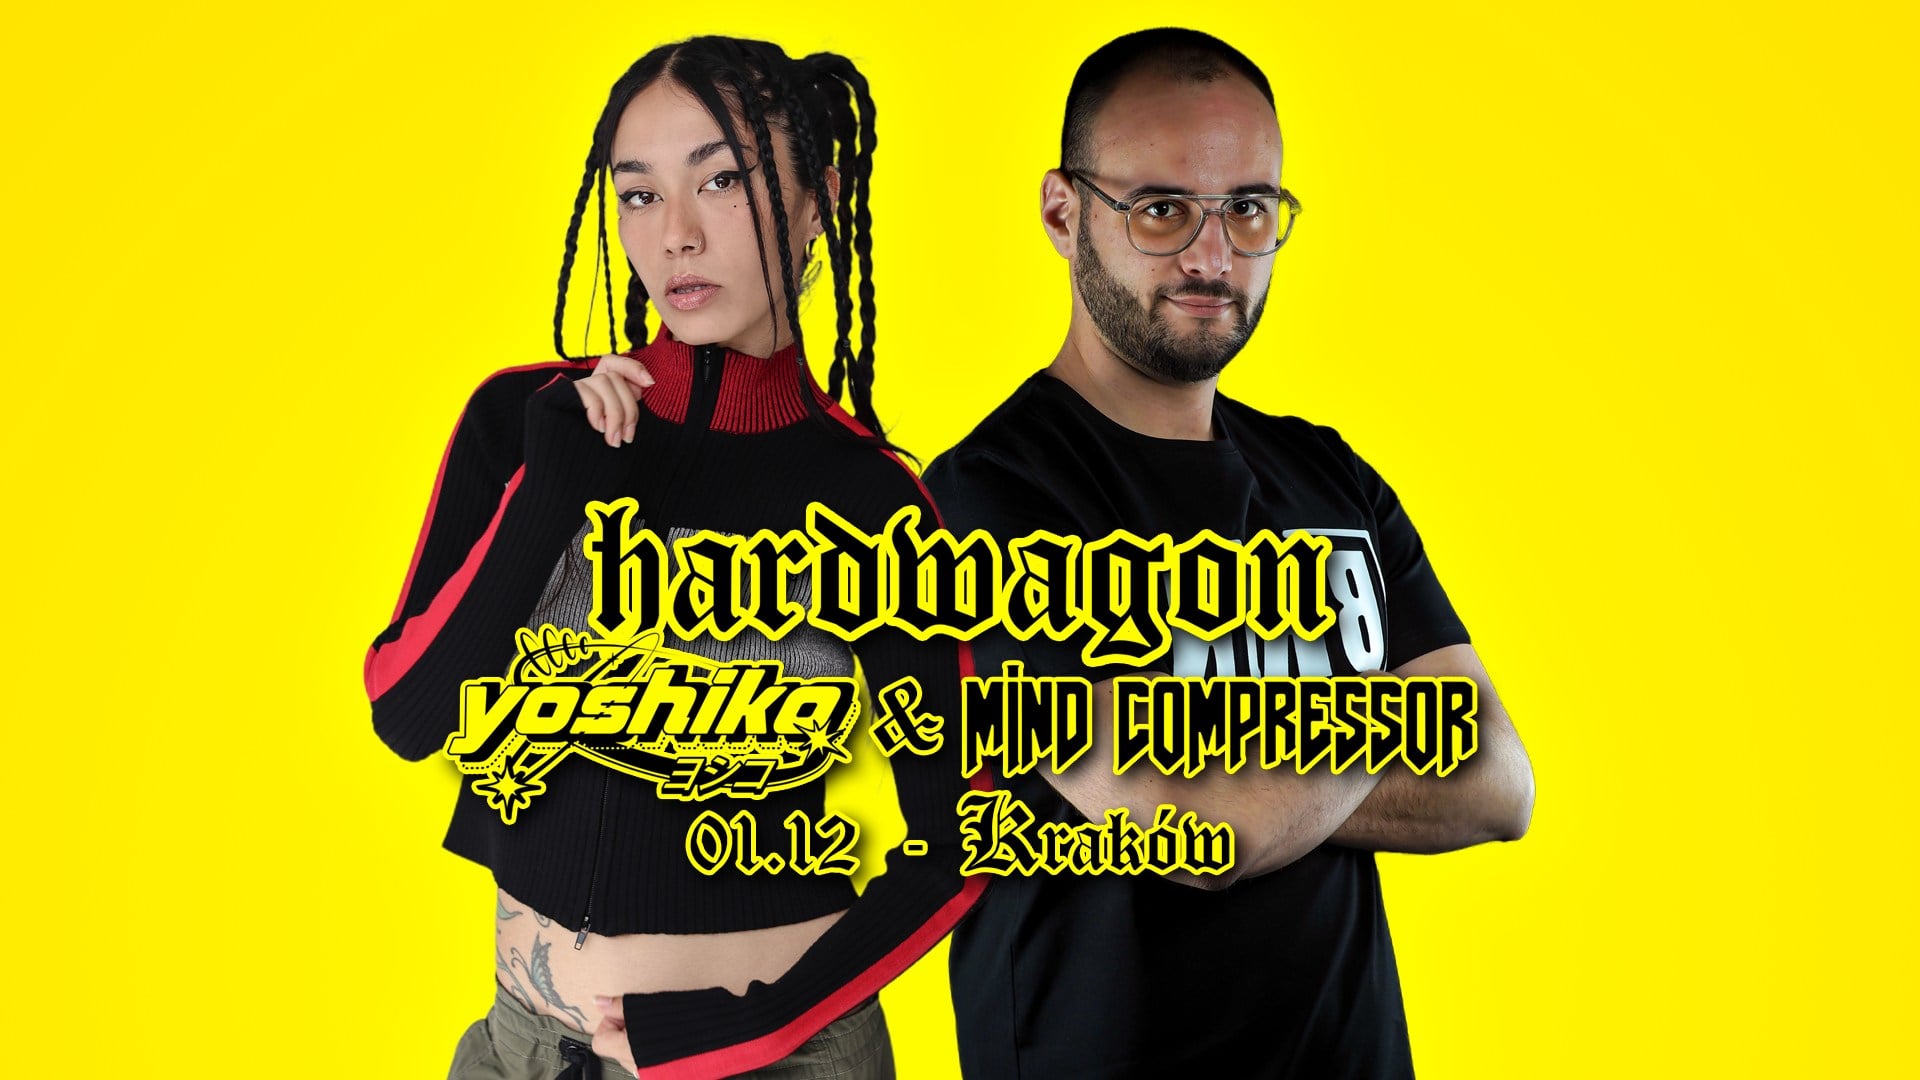 Hardwagon: Hardkorowe Andrzejki ft. Yoshiko & Mind Compressor